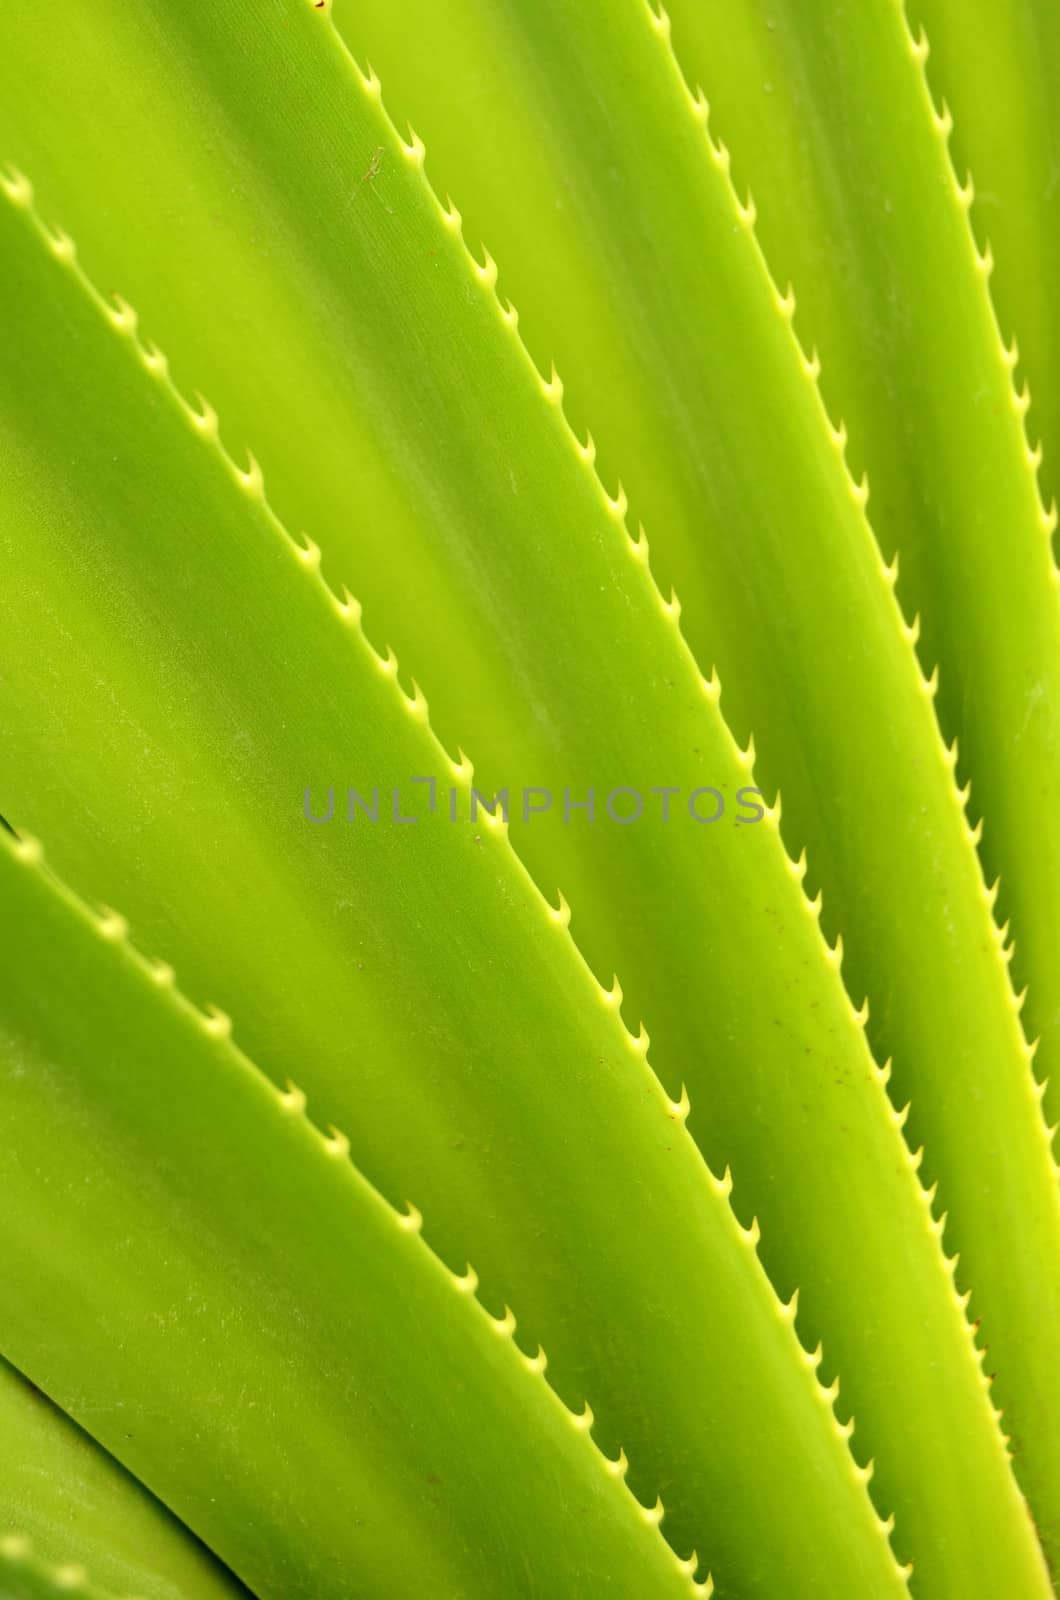 Spiky Tropical Leaf by mrdoomits